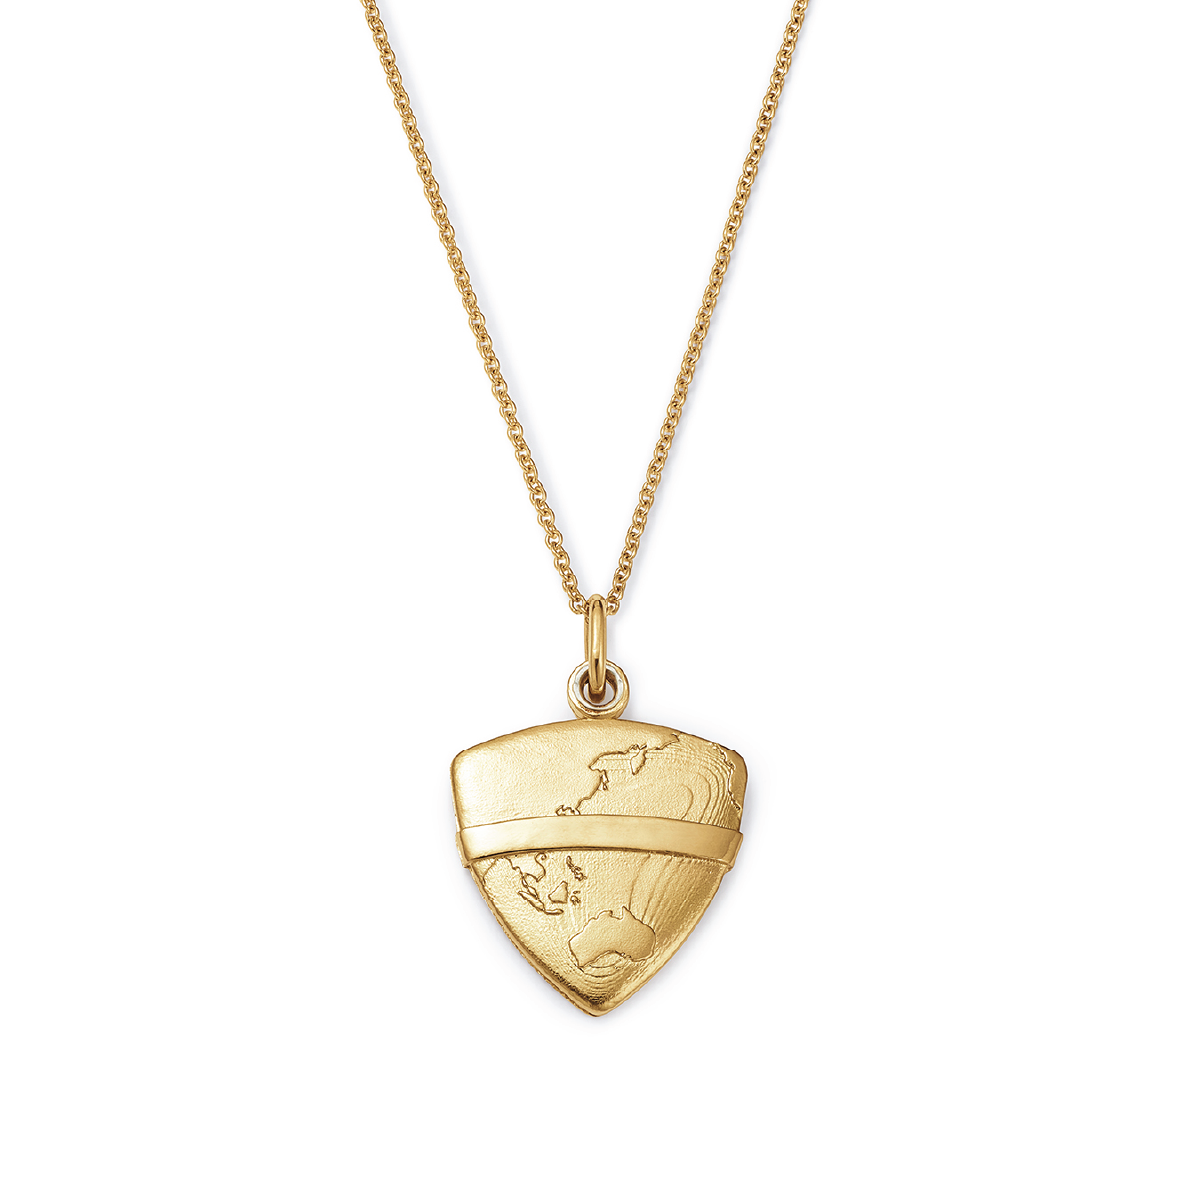 Eco-Friendly Gold Pendant by FUTURA Jewelry